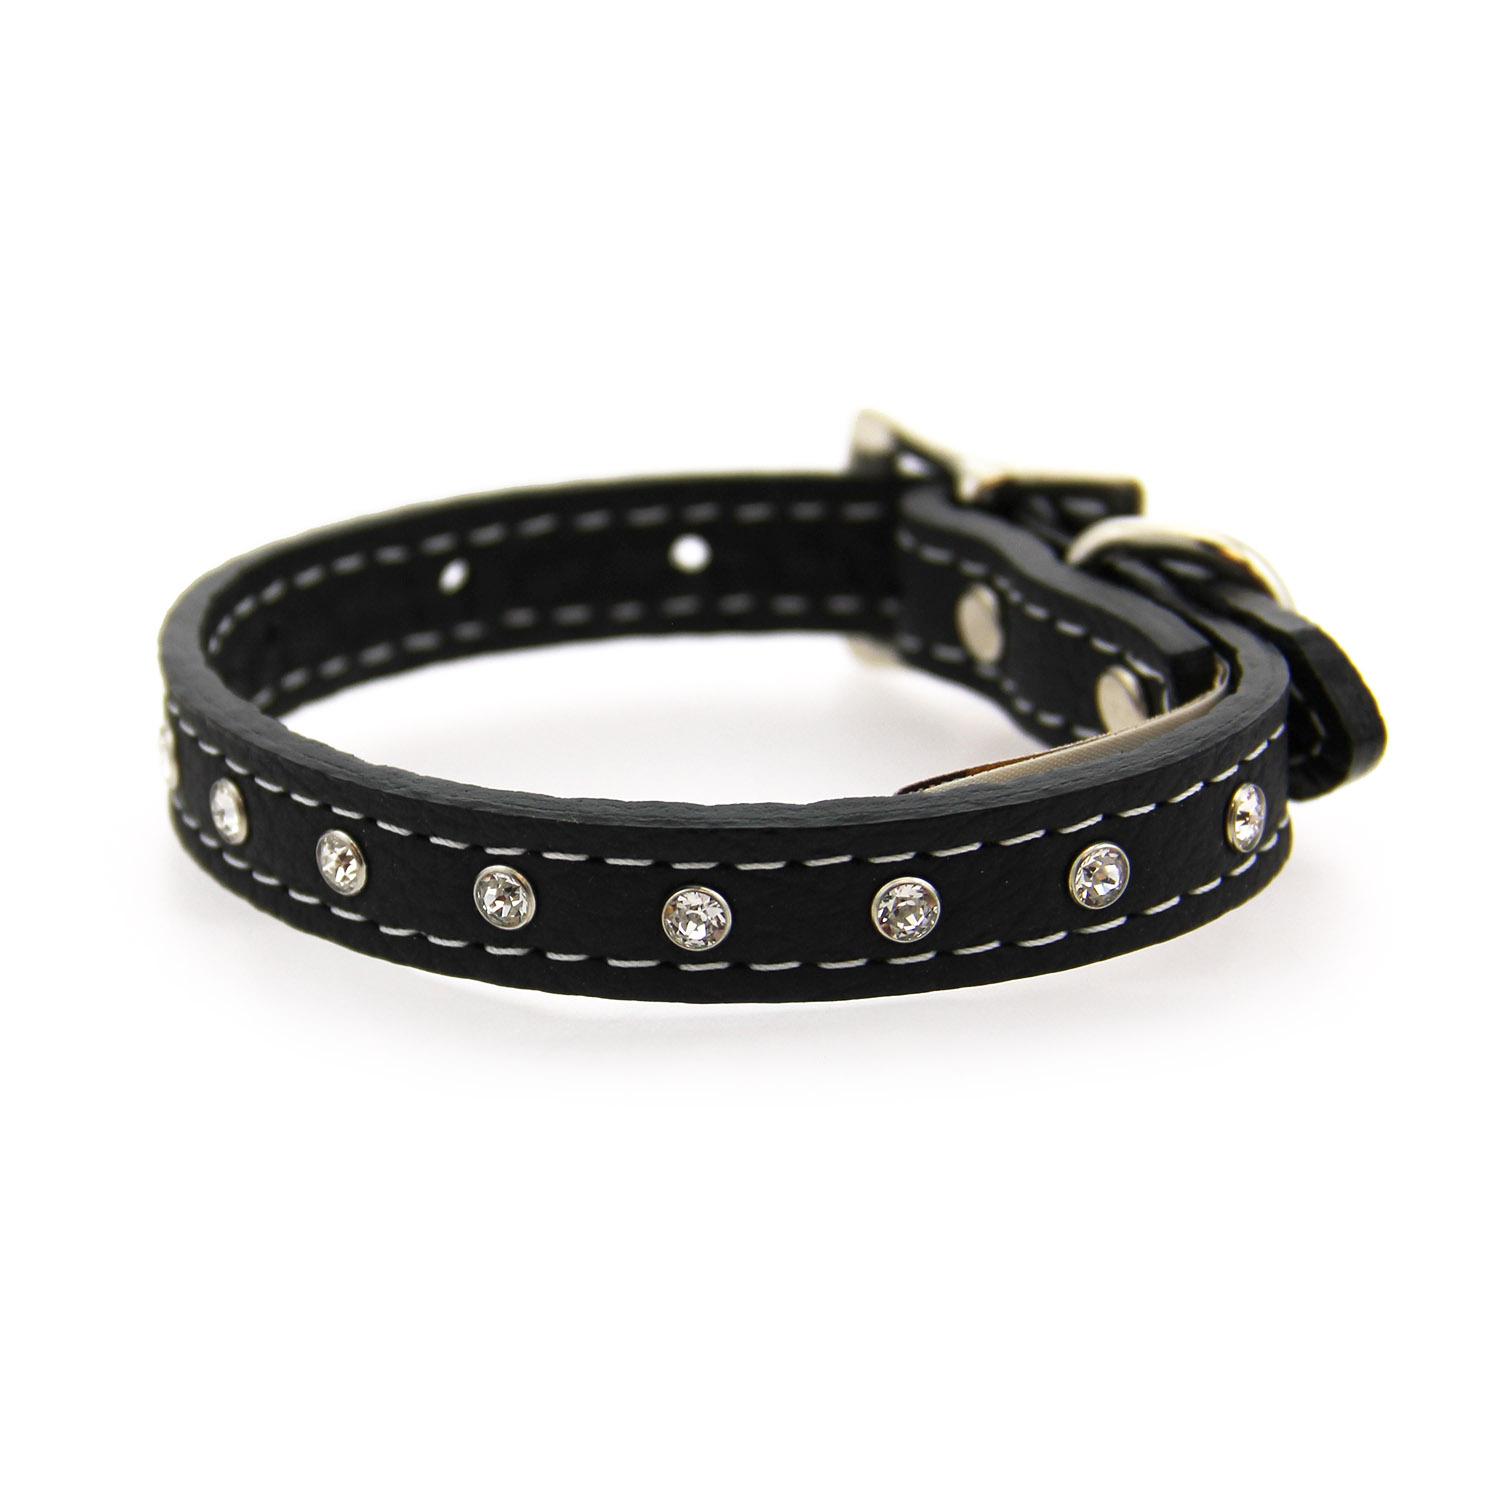 Tuscan Crystallized Leather Dog Collar by Auburn Leather - Black